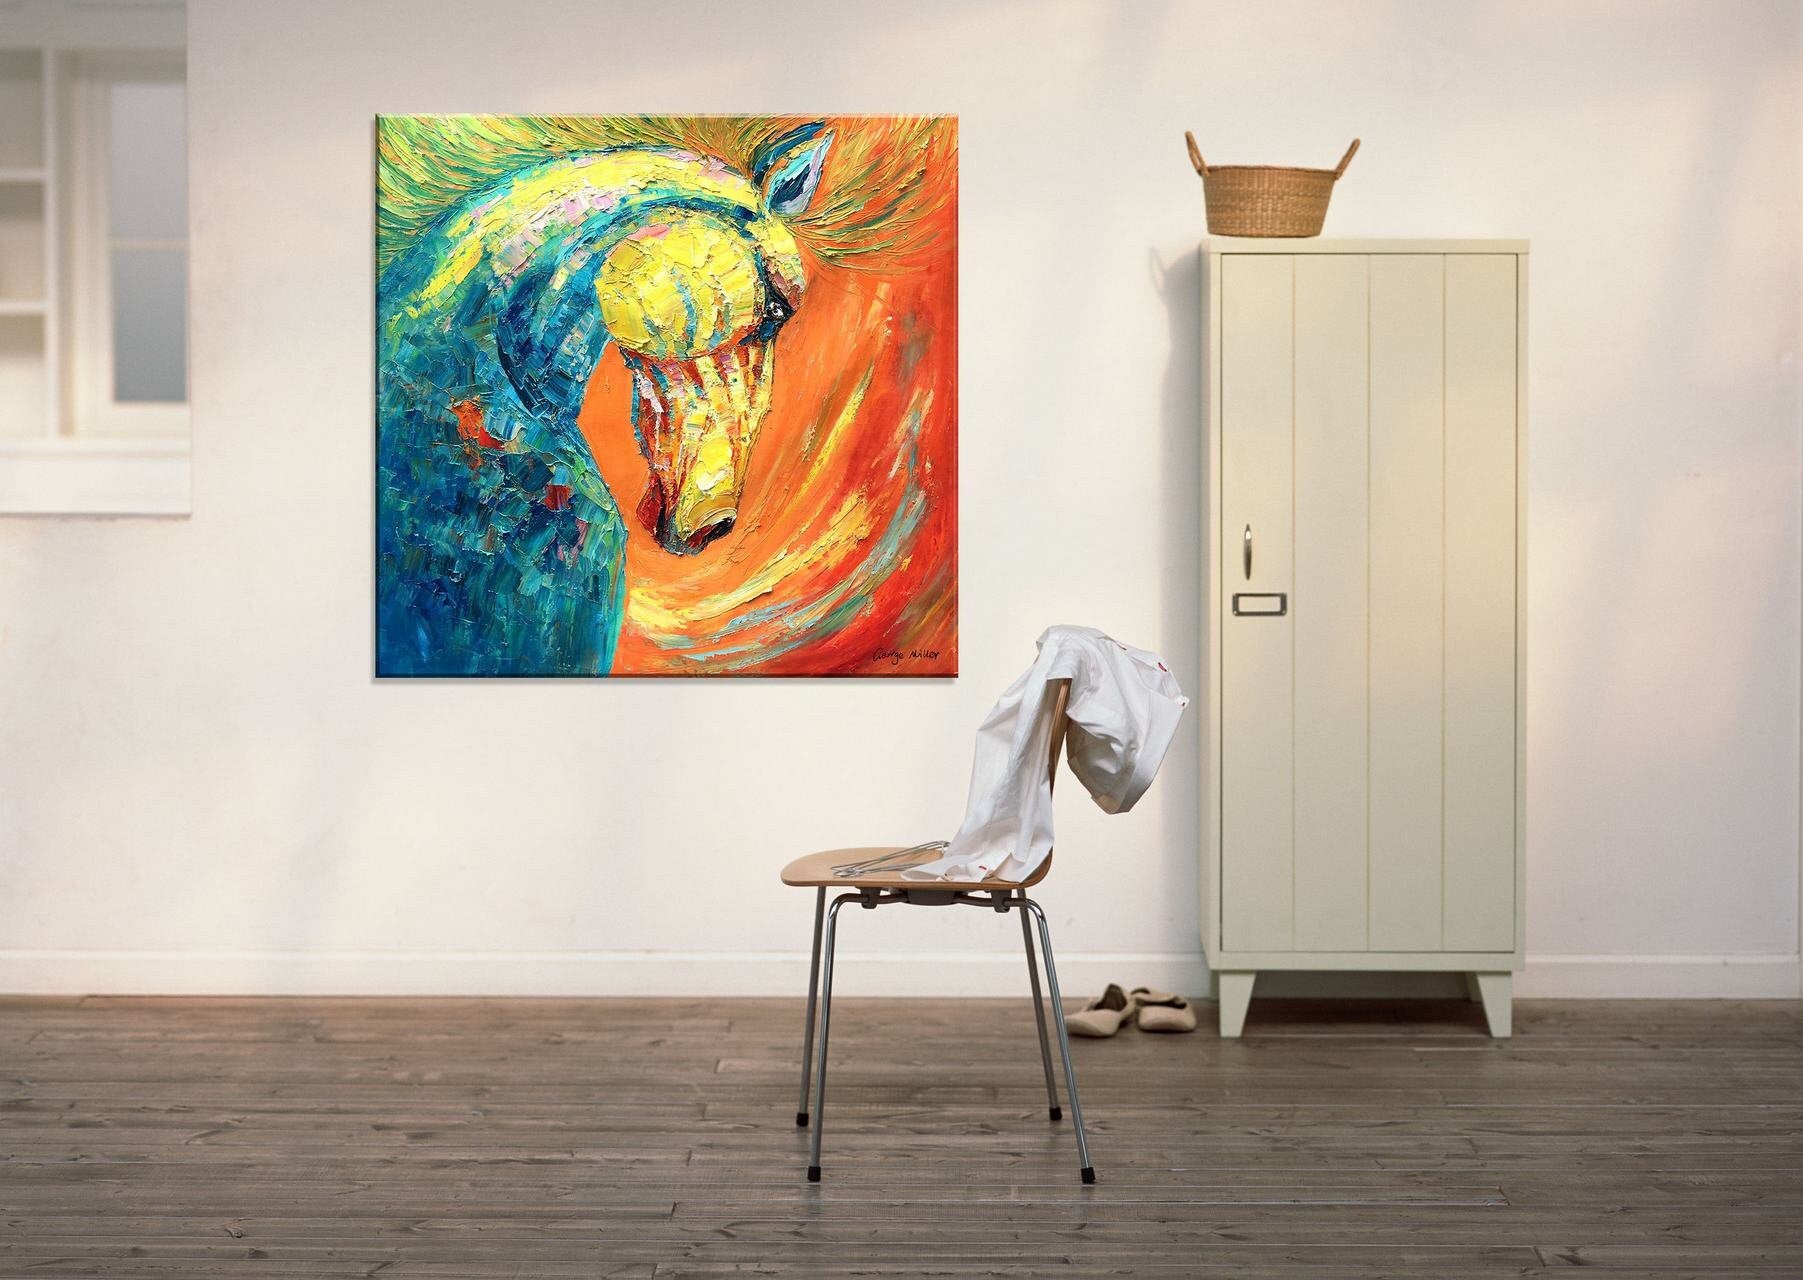 Horse Wall Art, Oil Painting Horse, Canvas Wall Decor, Living Room Wall Decor, Original Abstract Art, Abstract Painting, Abstract Canvas Art